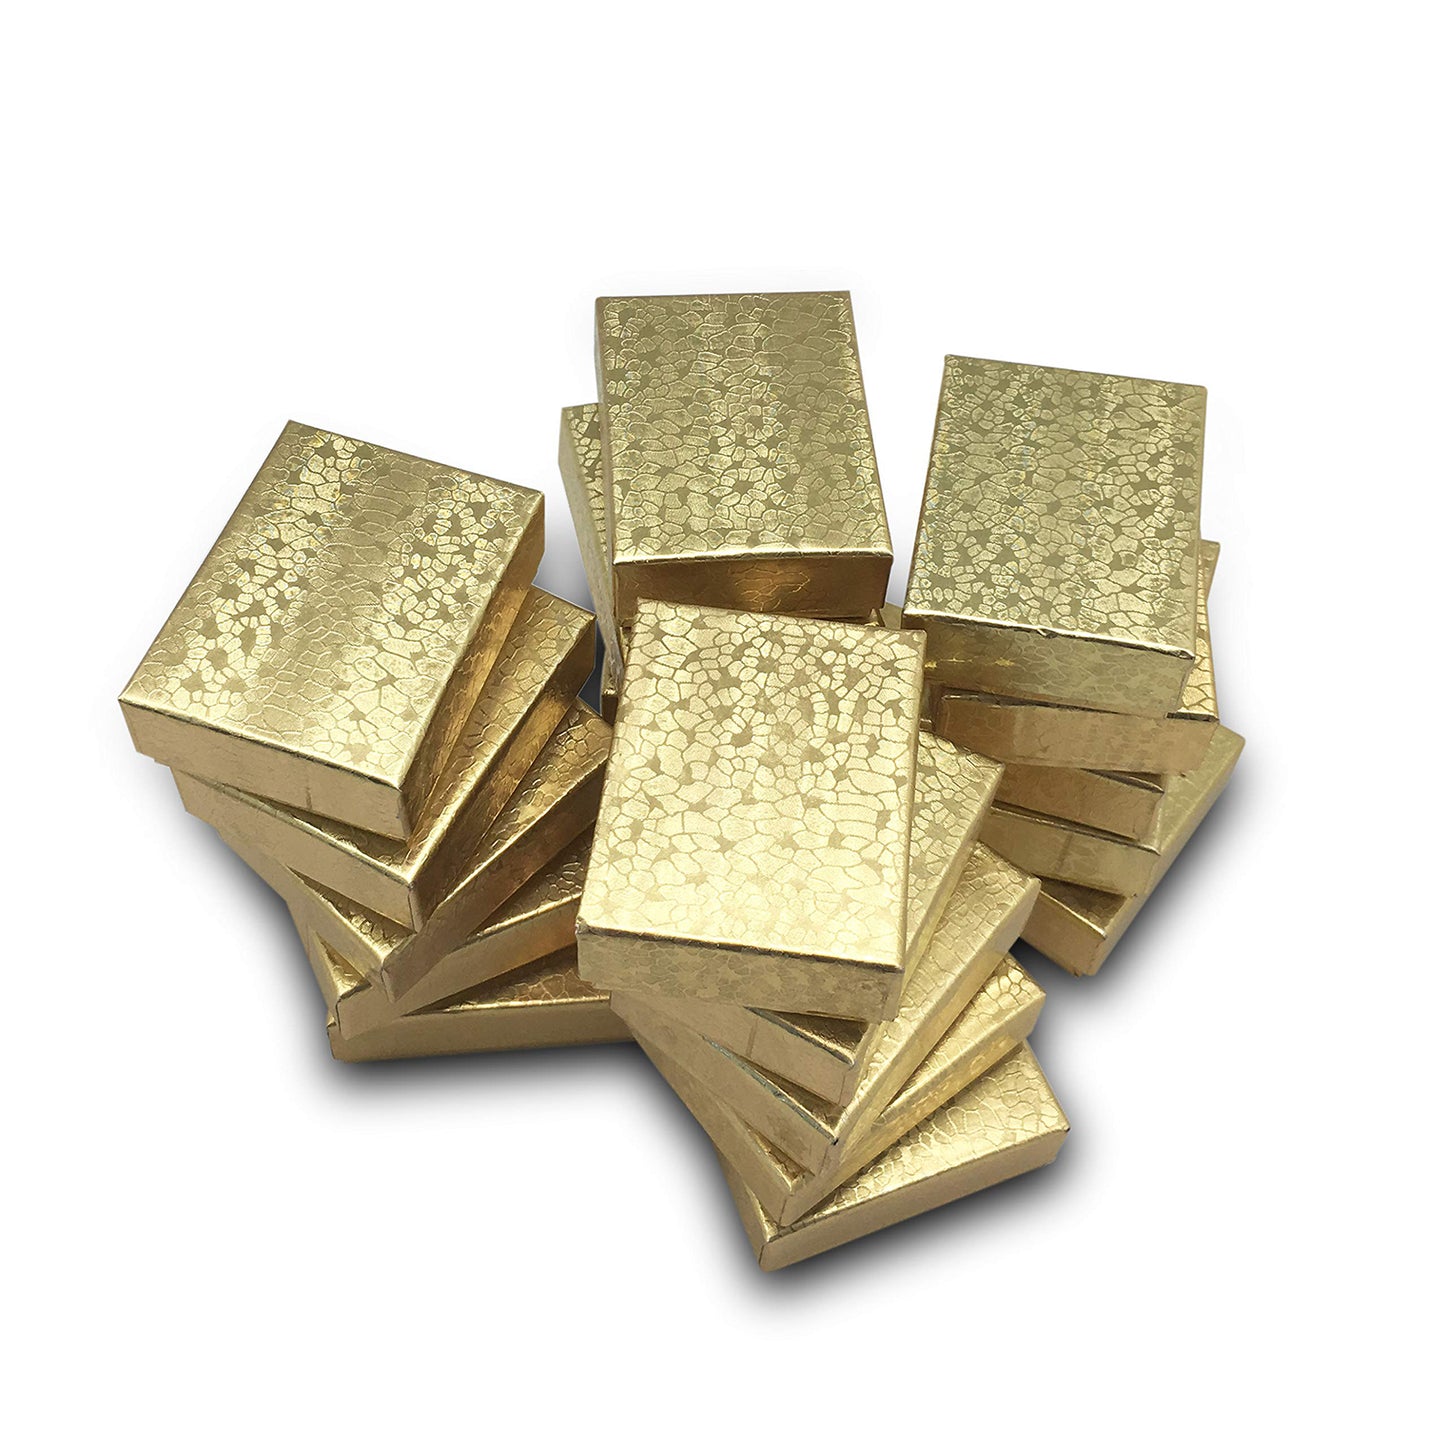 2 1/8" x 1 5/8" x 3/4" Gold Cotton Filled Paper Box